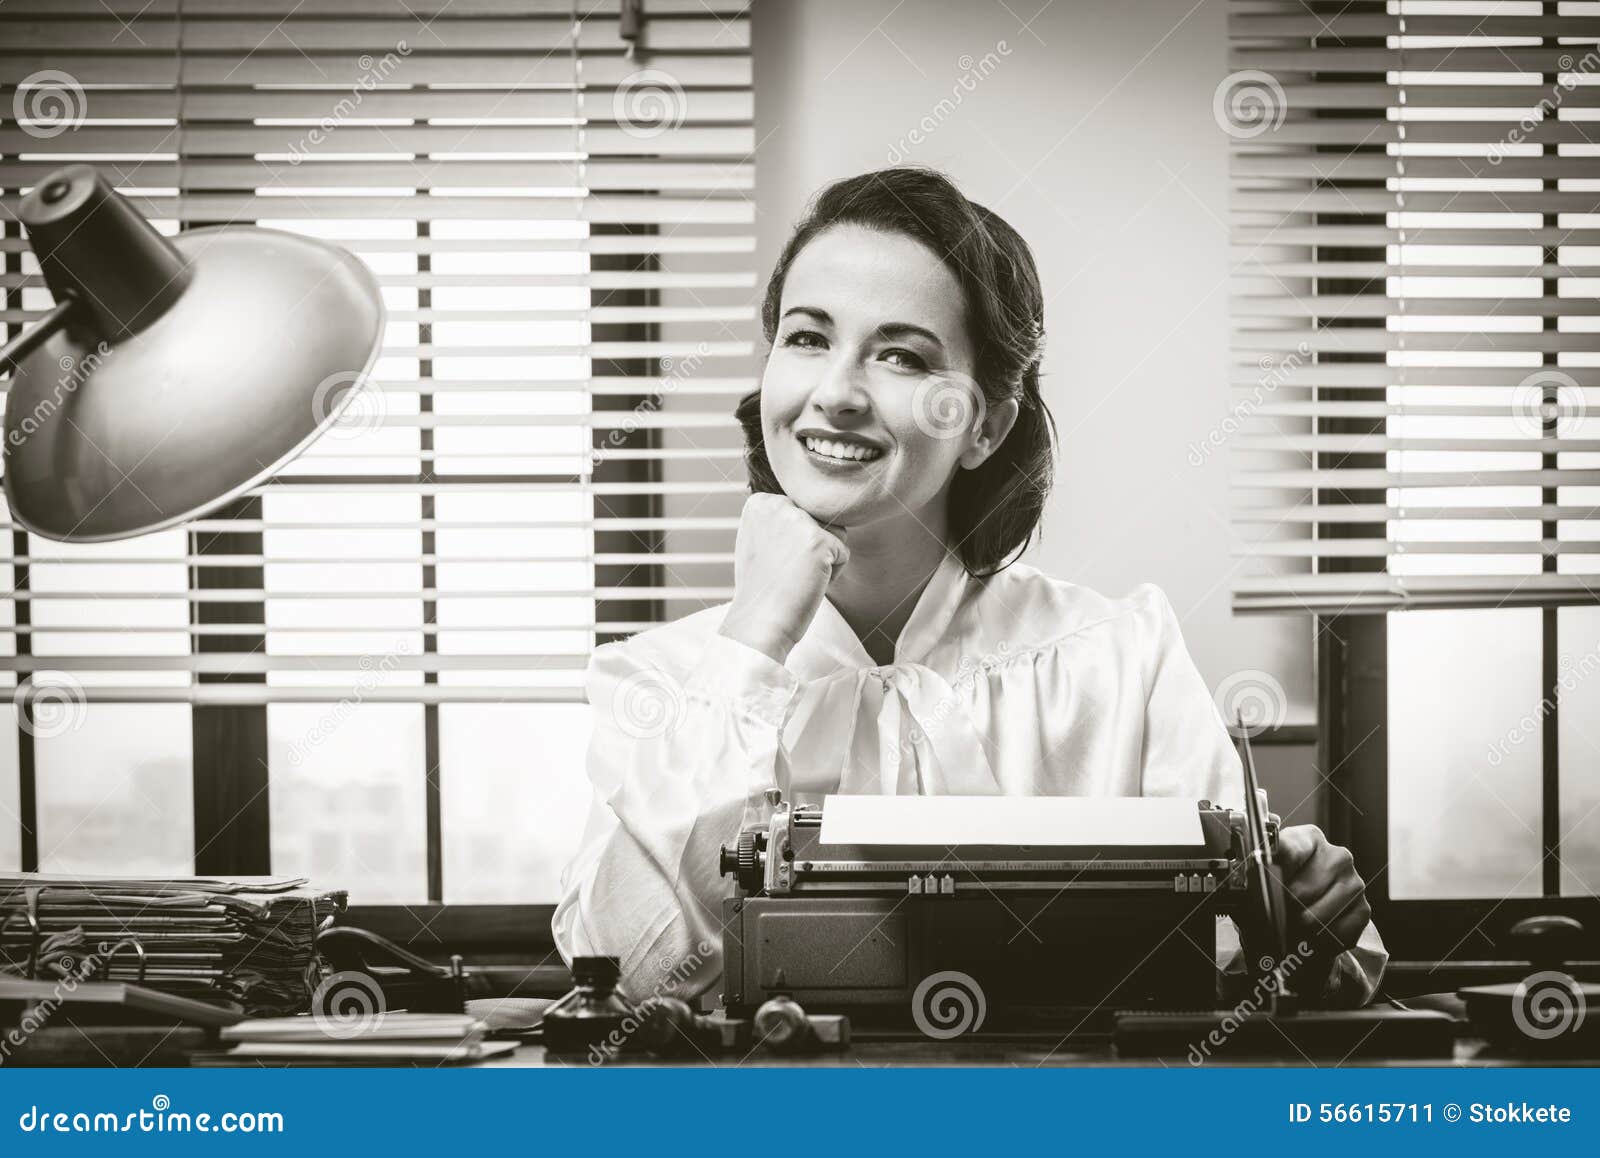 smiling secretary at work